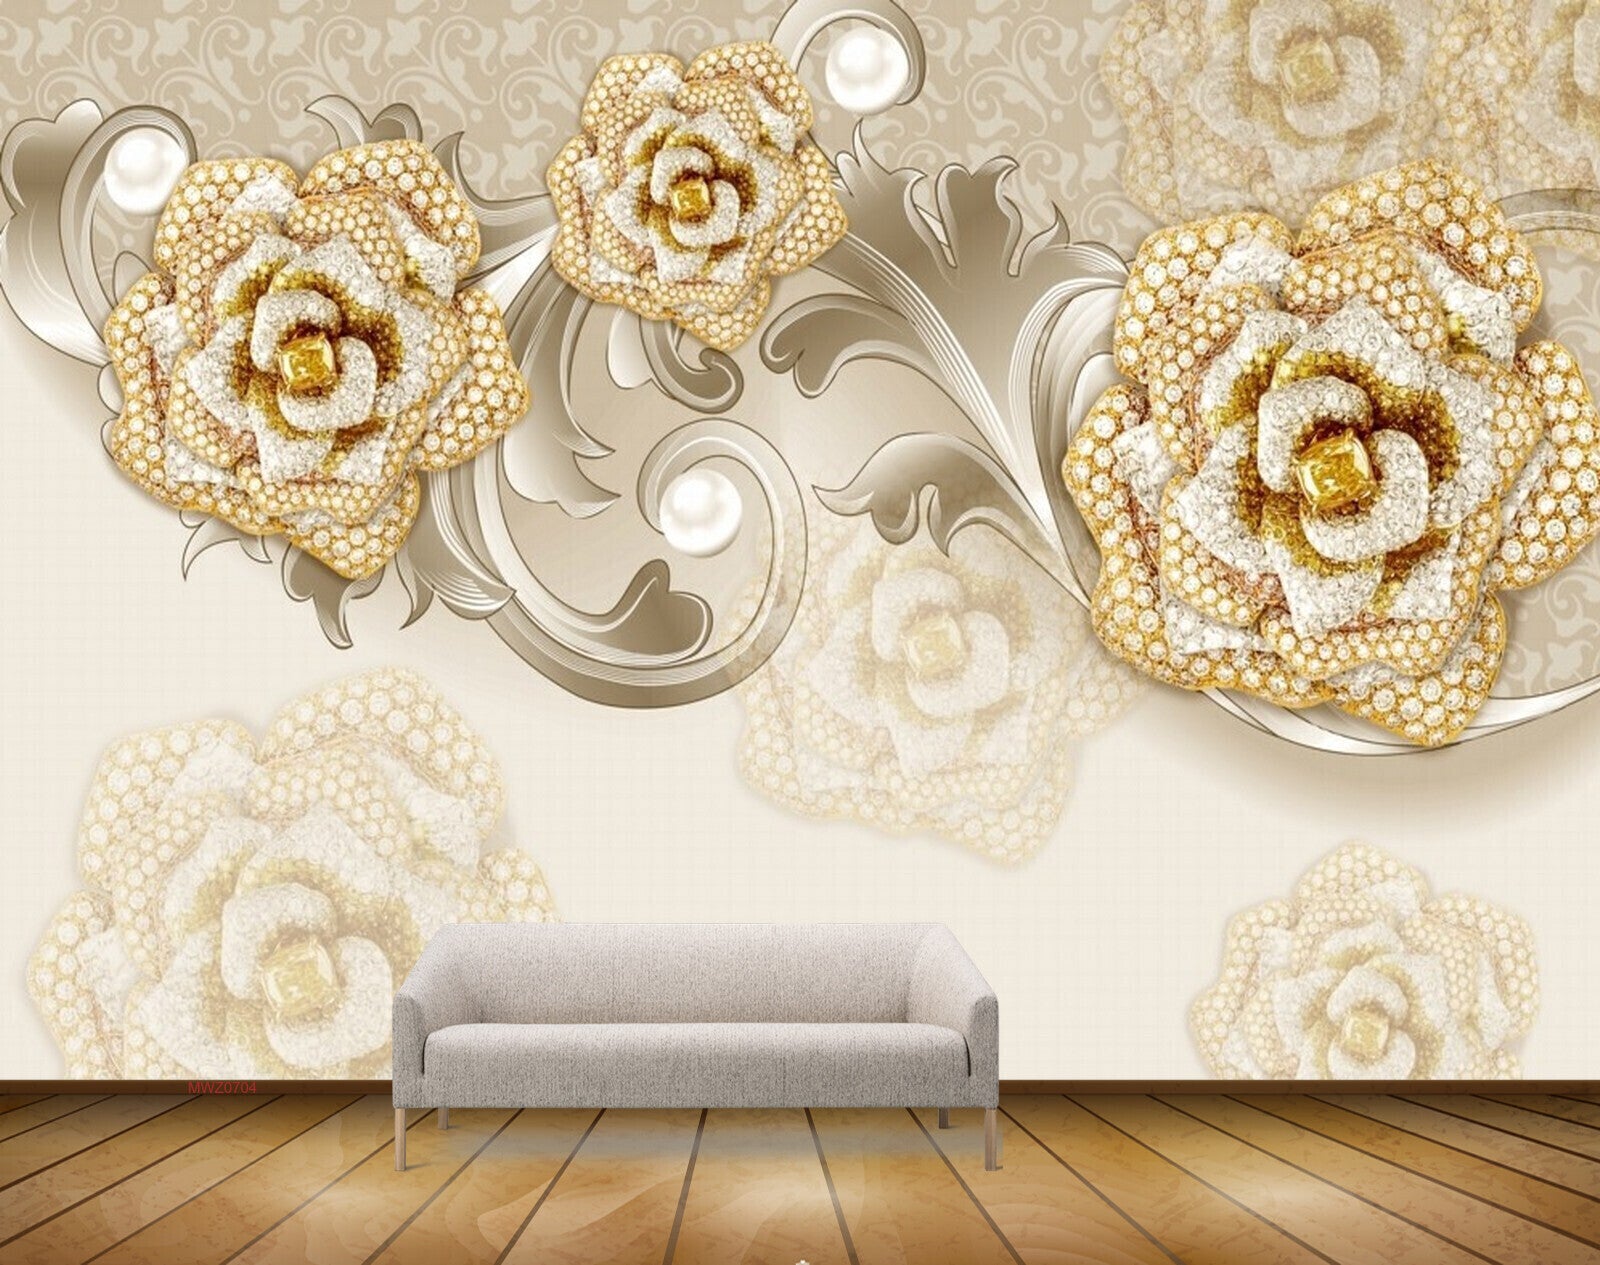 Avikalp MWZ0704 Golden White Flowers HD Wallpaper